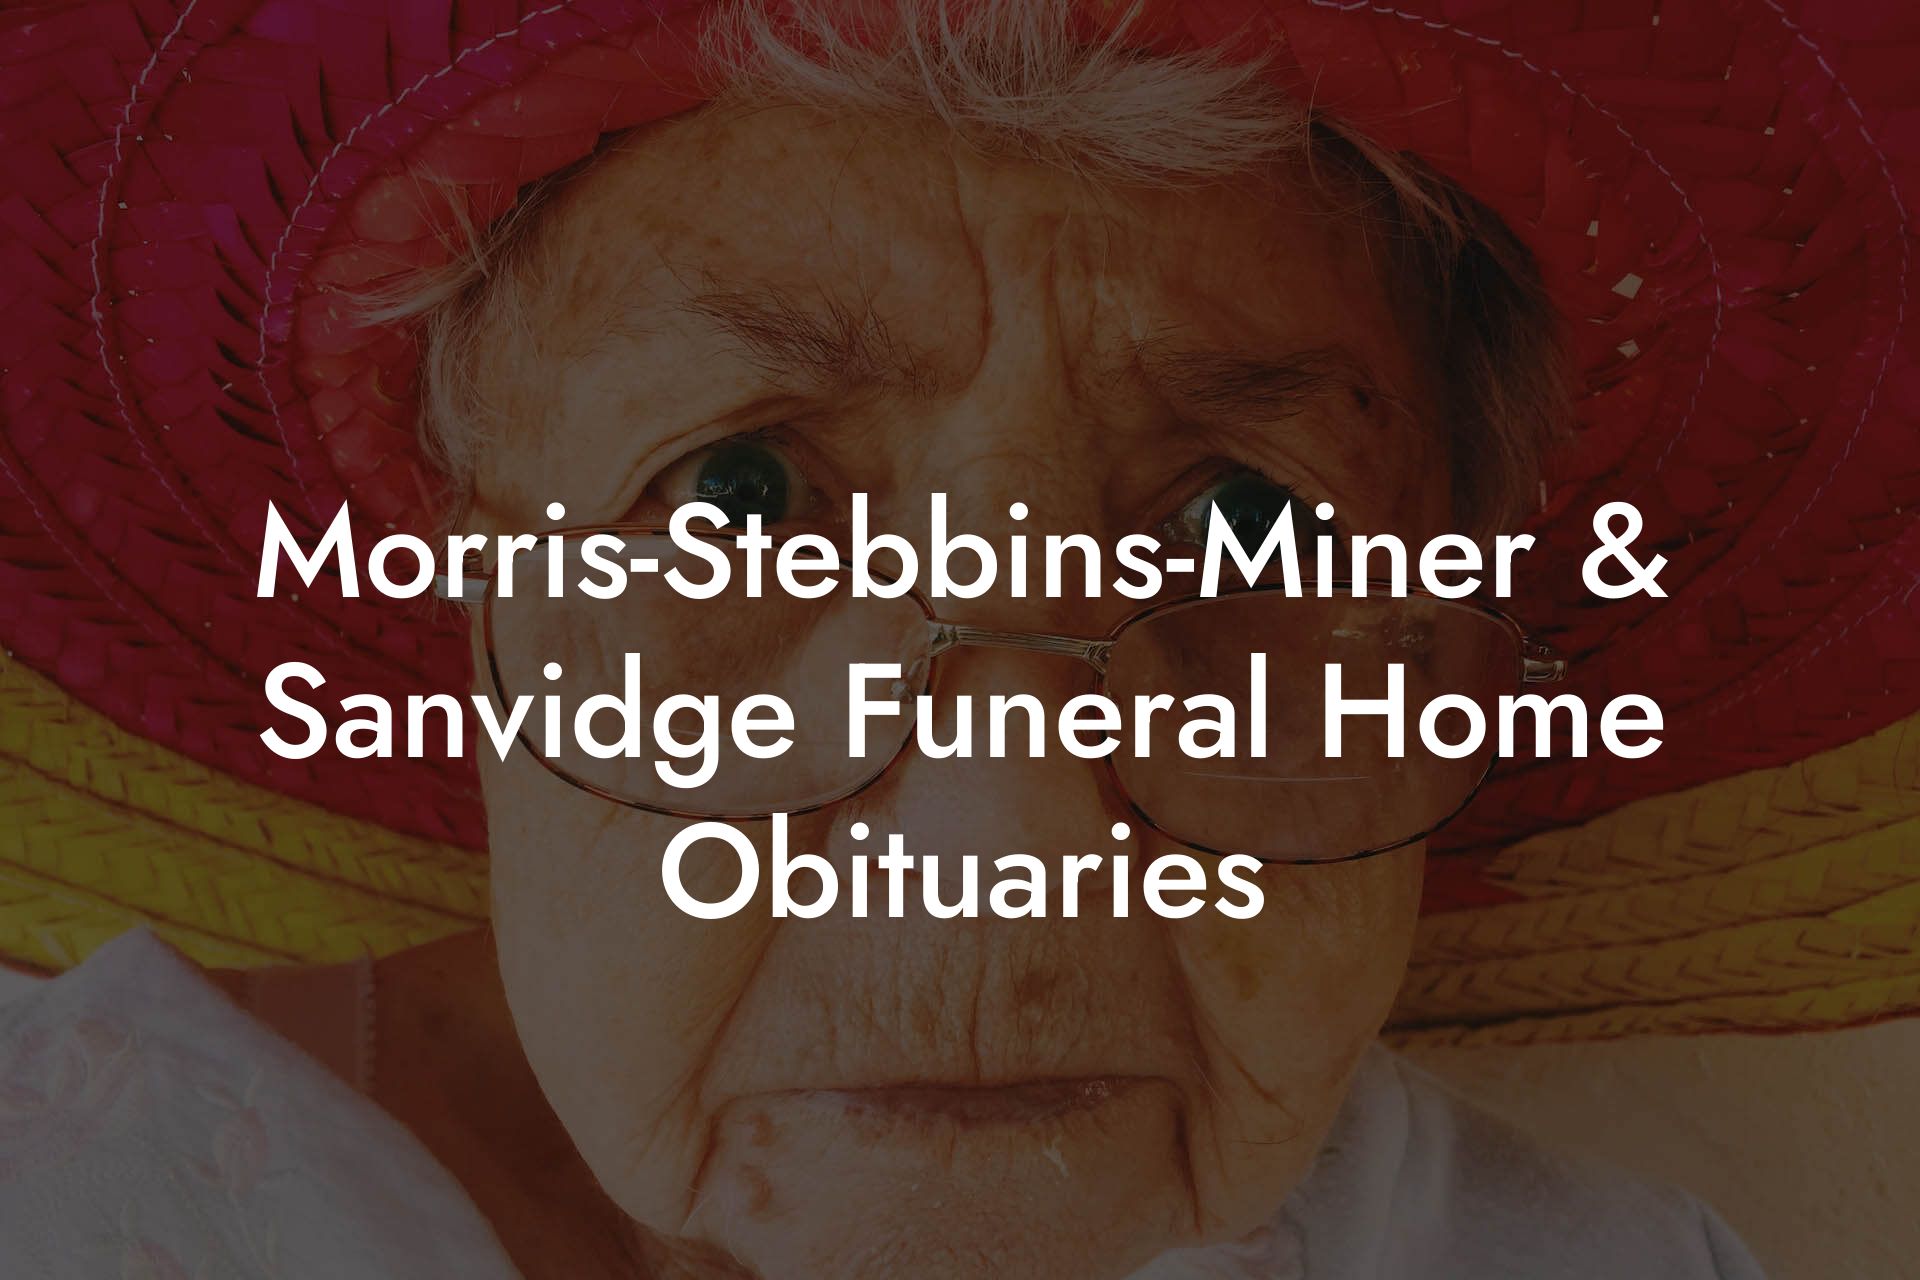 Morris-Stebbins-Miner & Sanvidge Funeral Home Obituaries